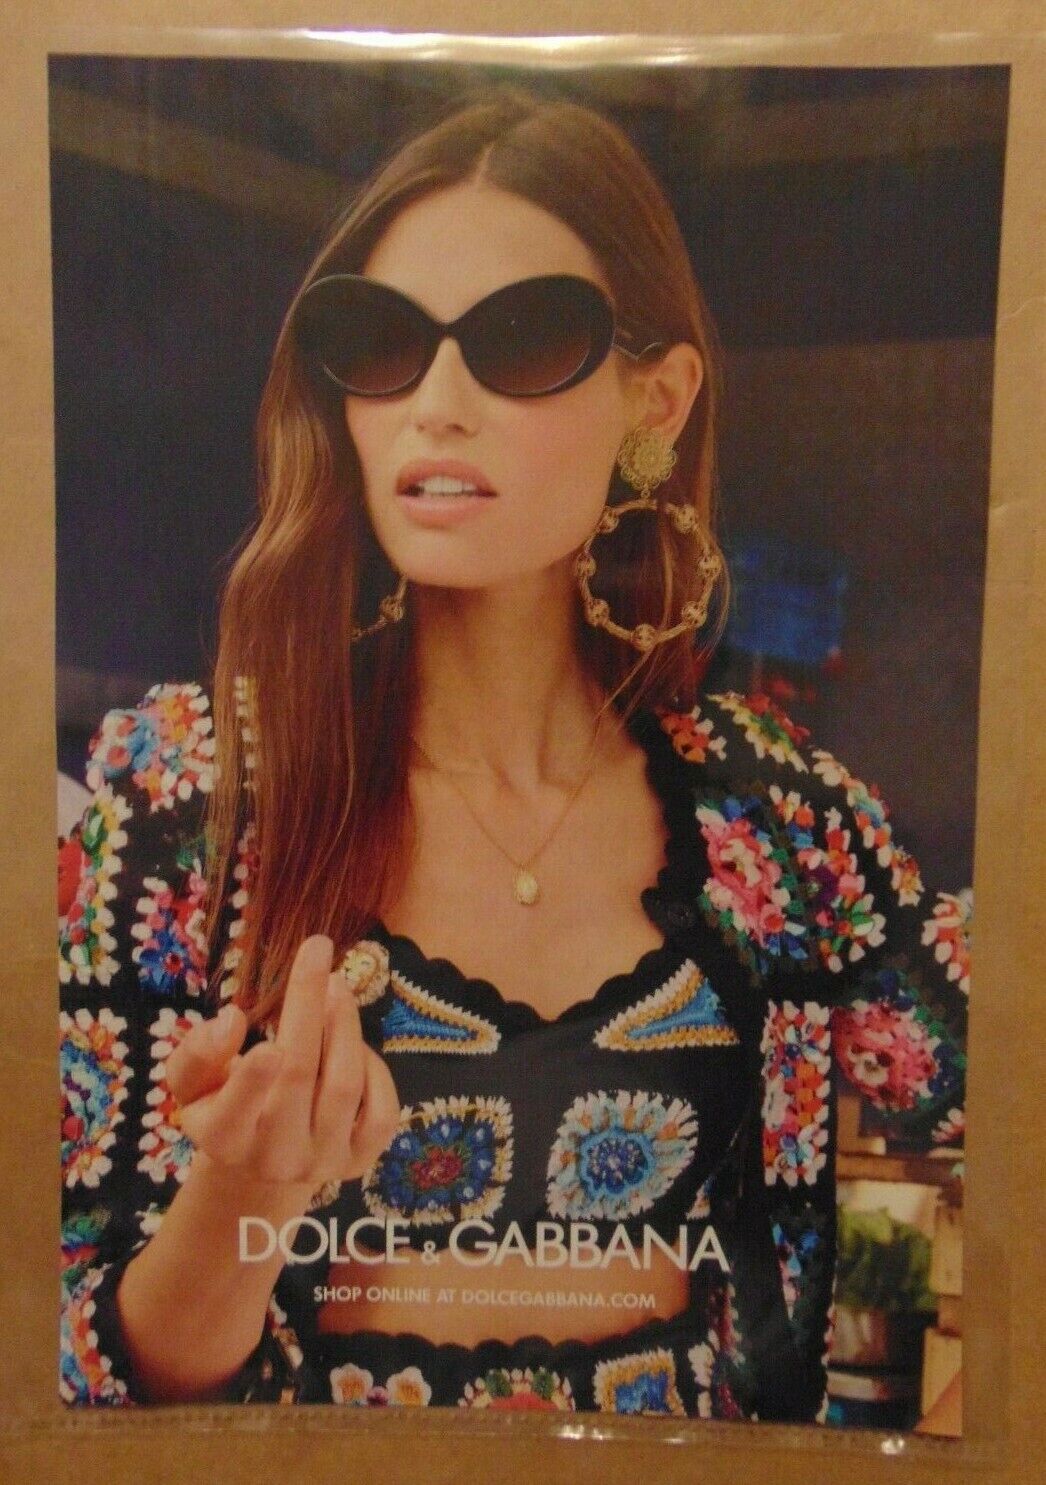 DOLCE & GABBANA Fashion Designer Original Print Ad PROMO Advertisement